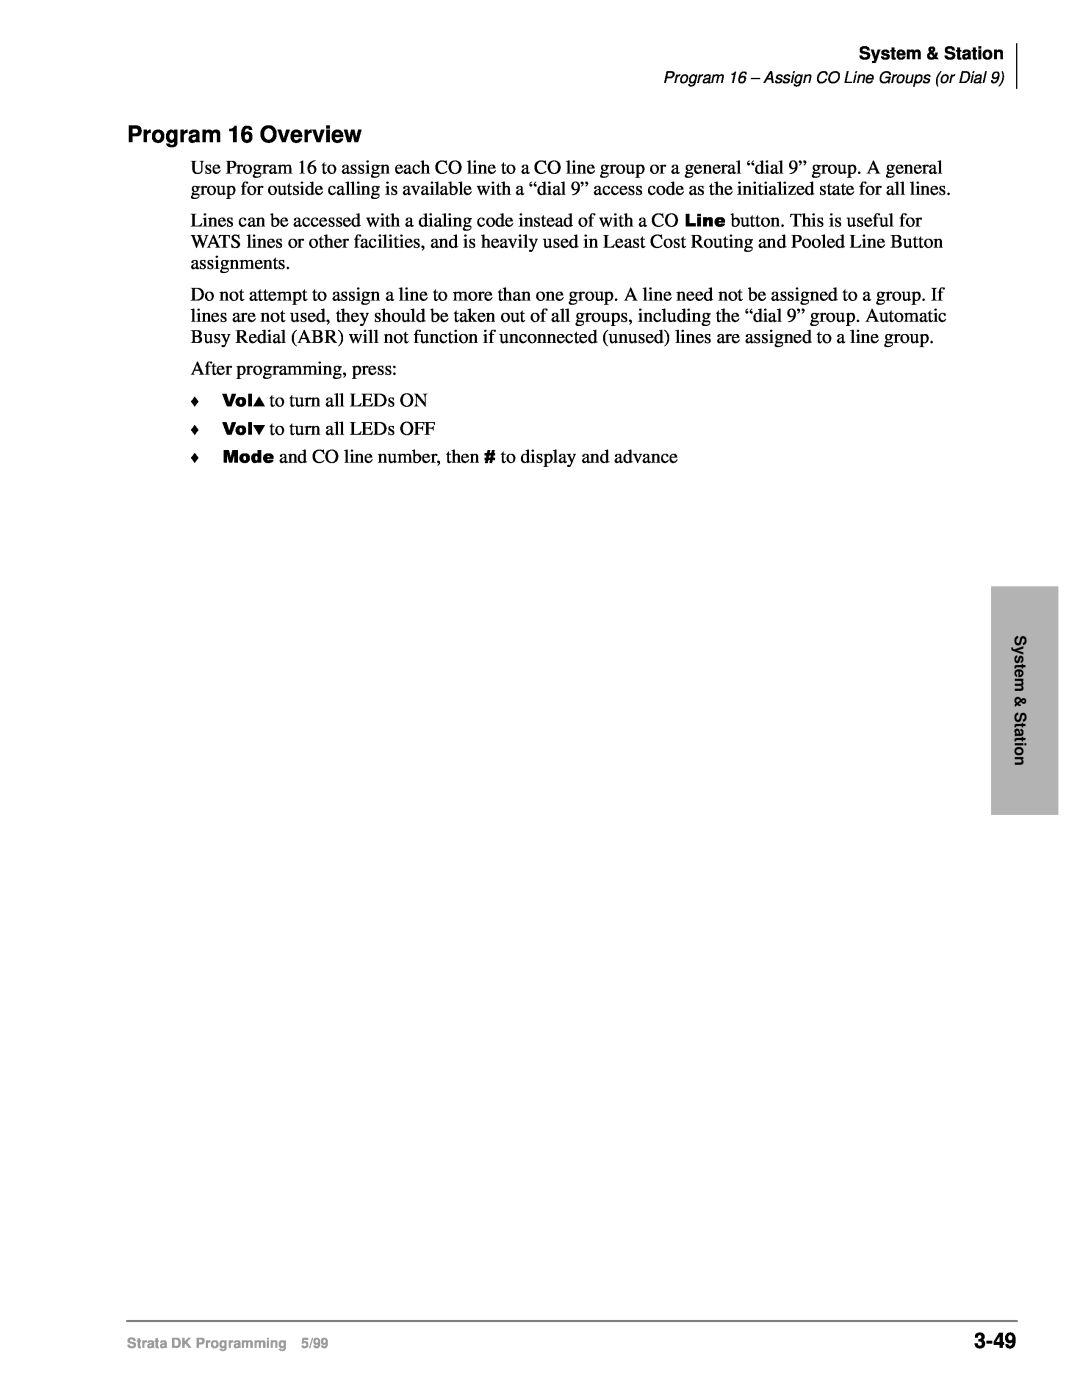 Toshiba dk14 manual Program 16 Overview, 3-49 